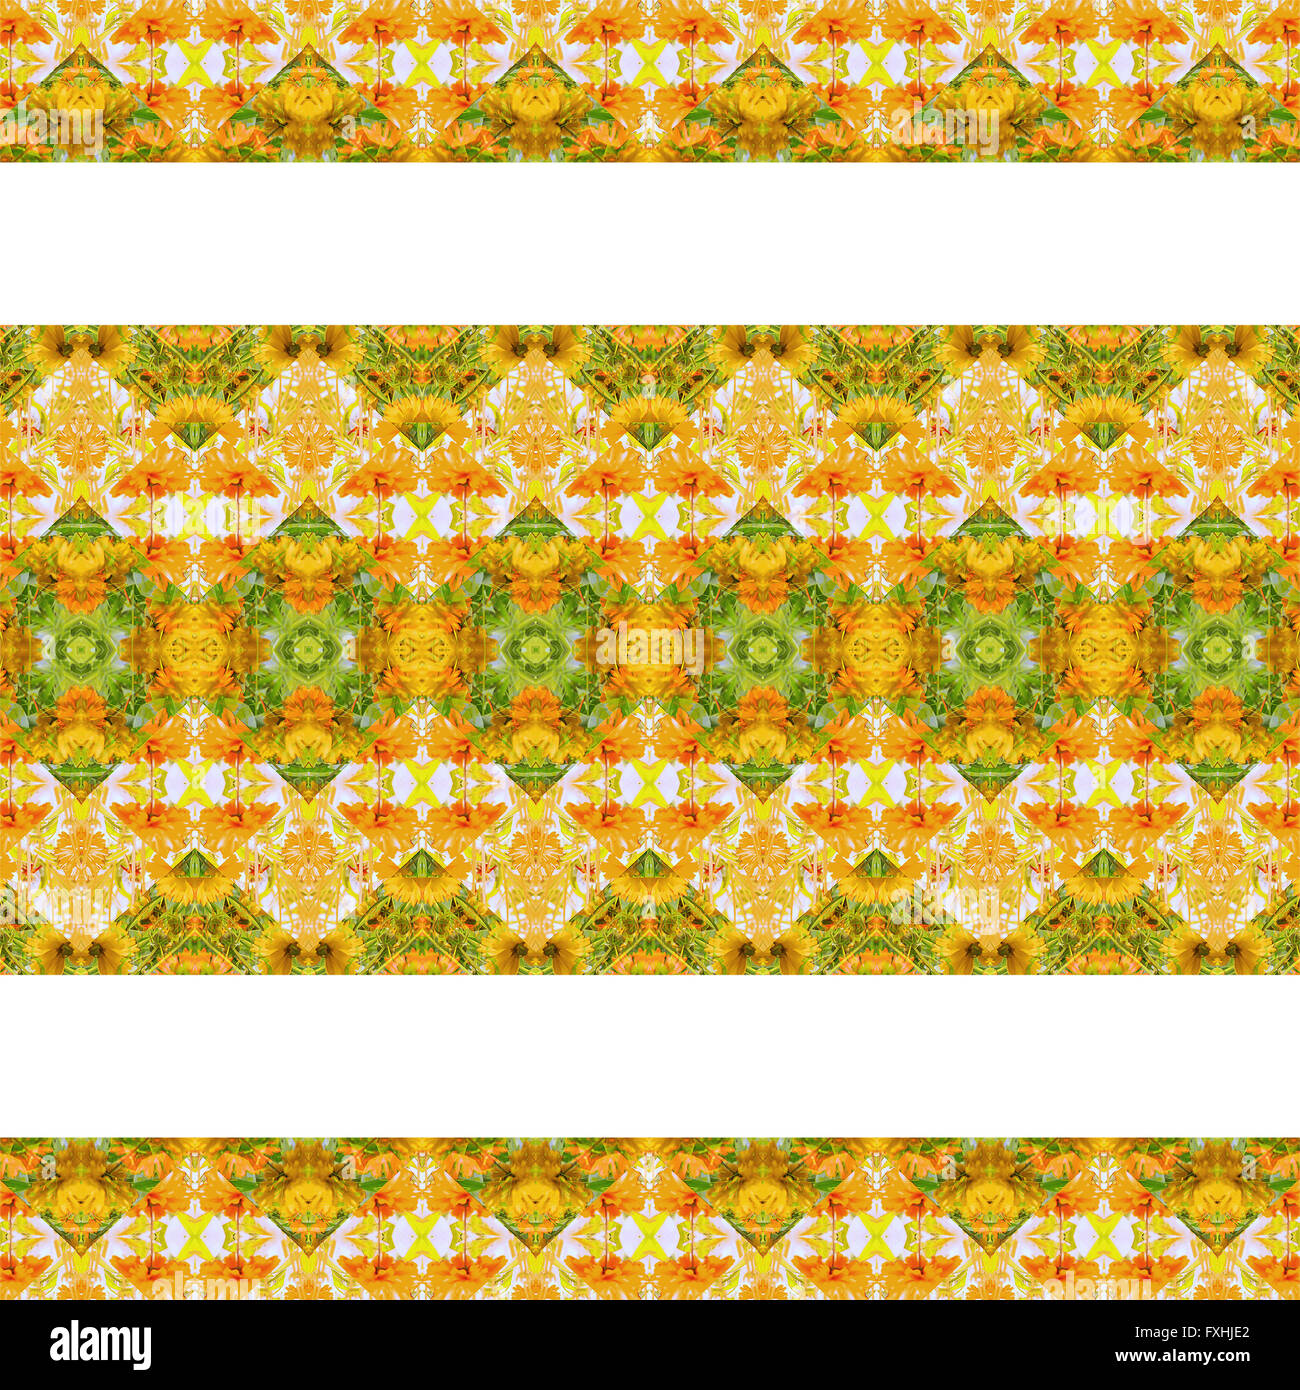 Digital collage technique stylized floral decorative stripes pattern design against white background Stock Photo